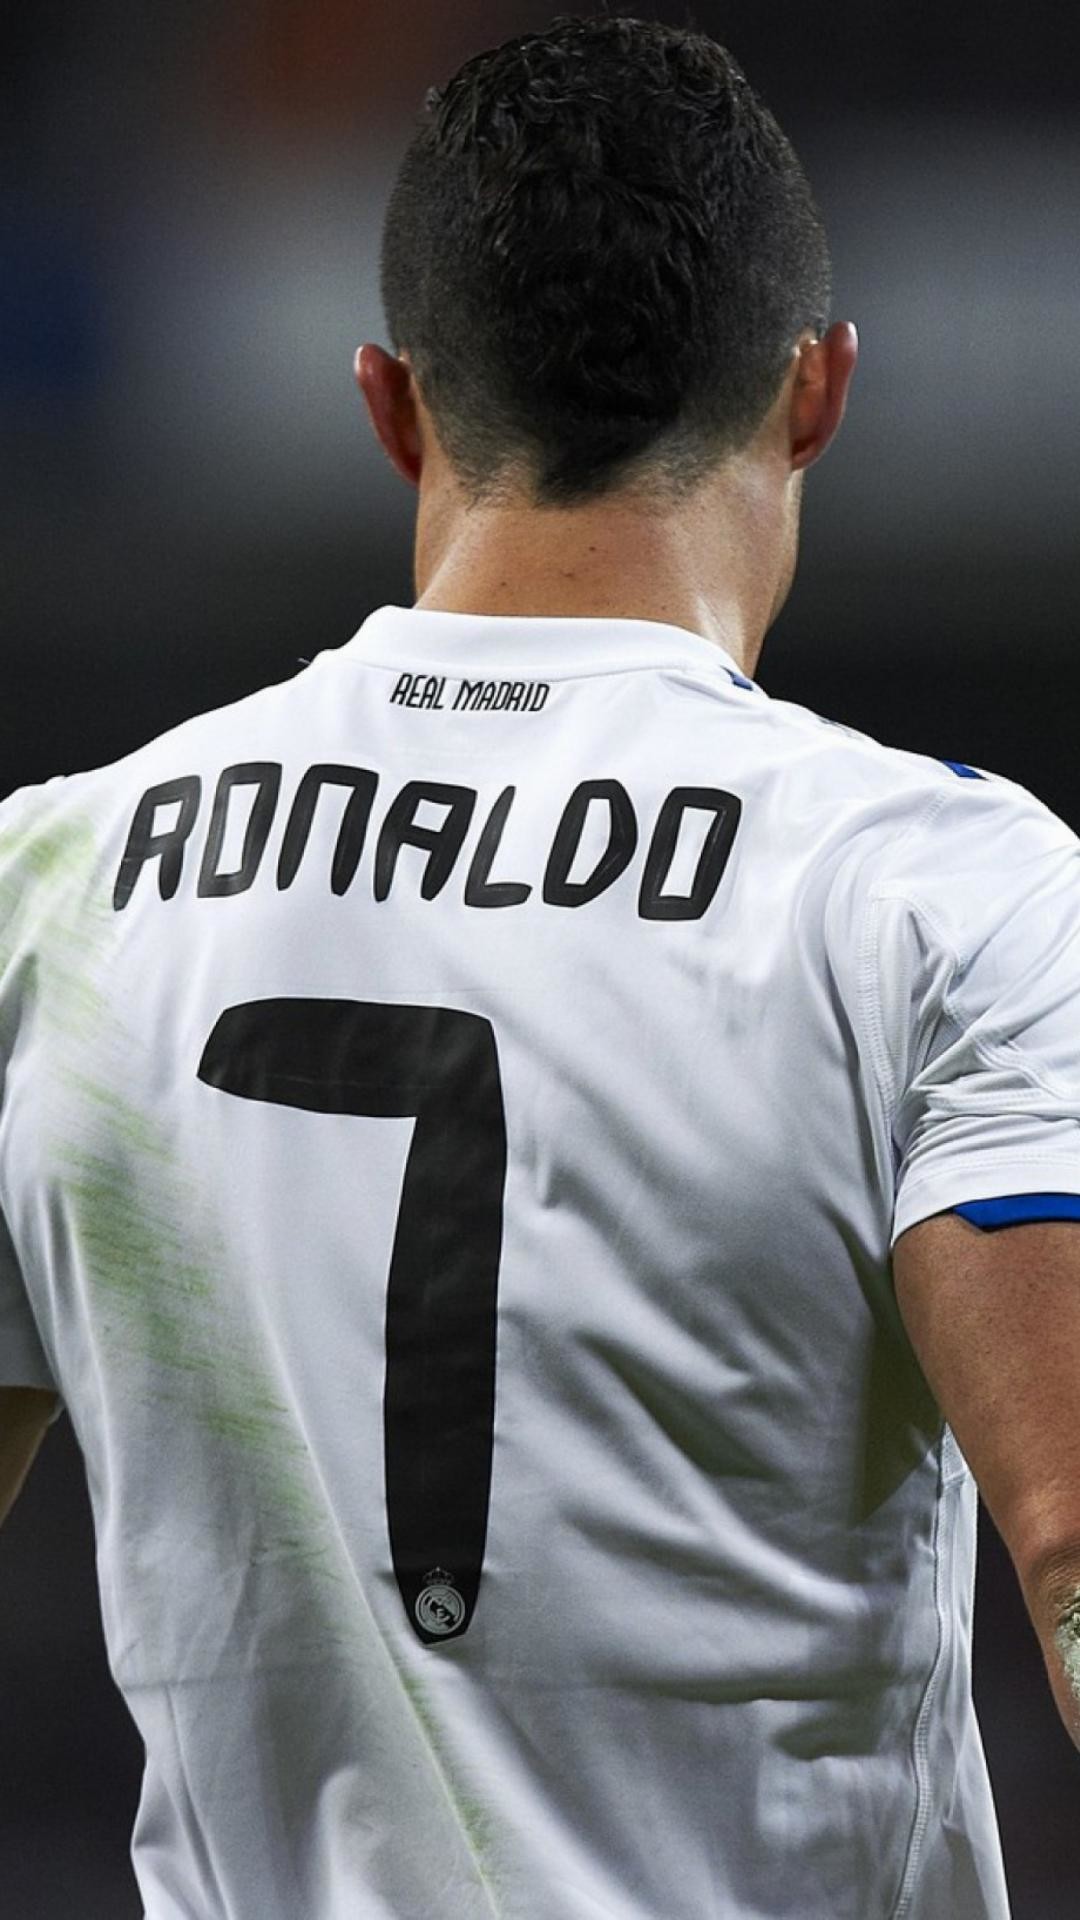 1080x1920 wallpaper.wiki-Cristiano-Ronaldo-iPhone-Full-HD-Wallpaper-